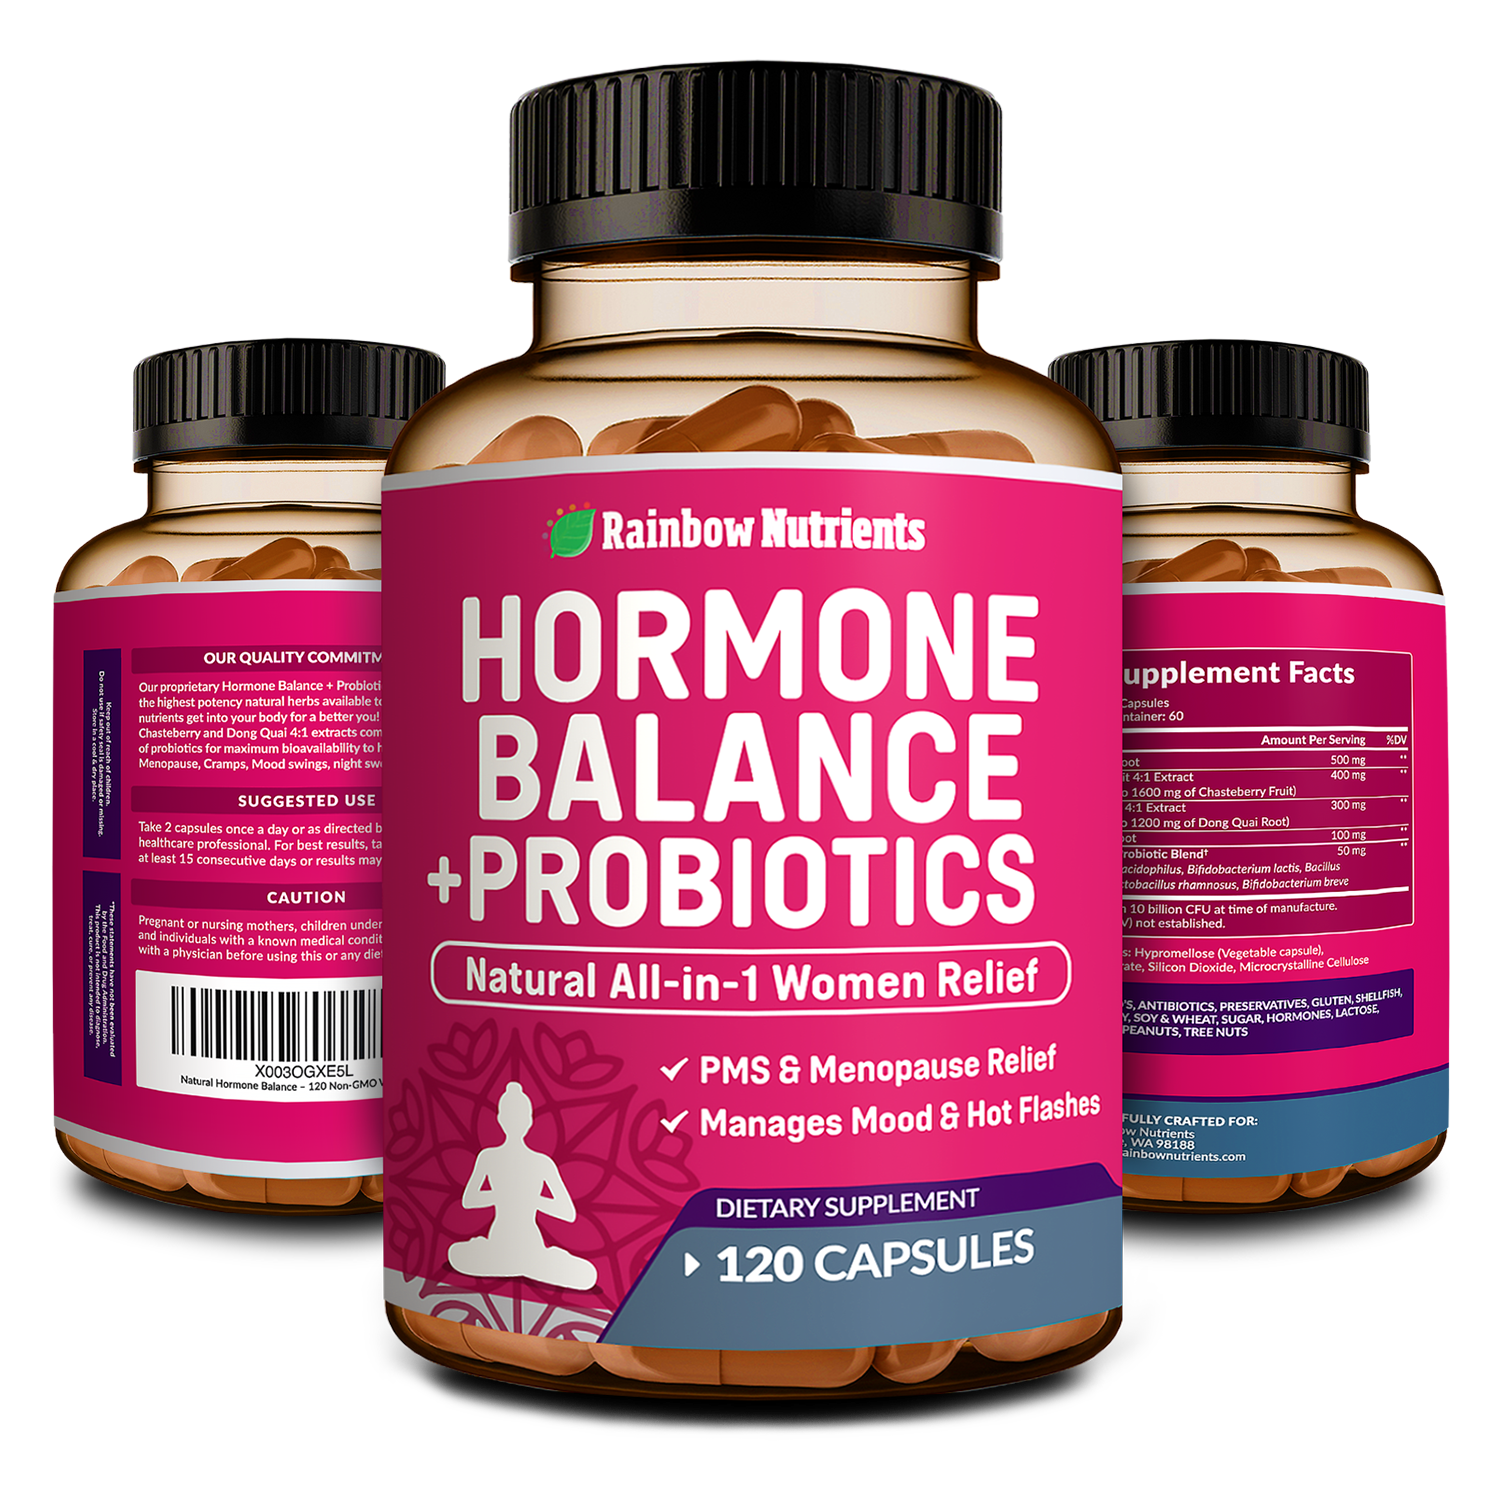 Hormone Balance + Probiotics bottle from all sides